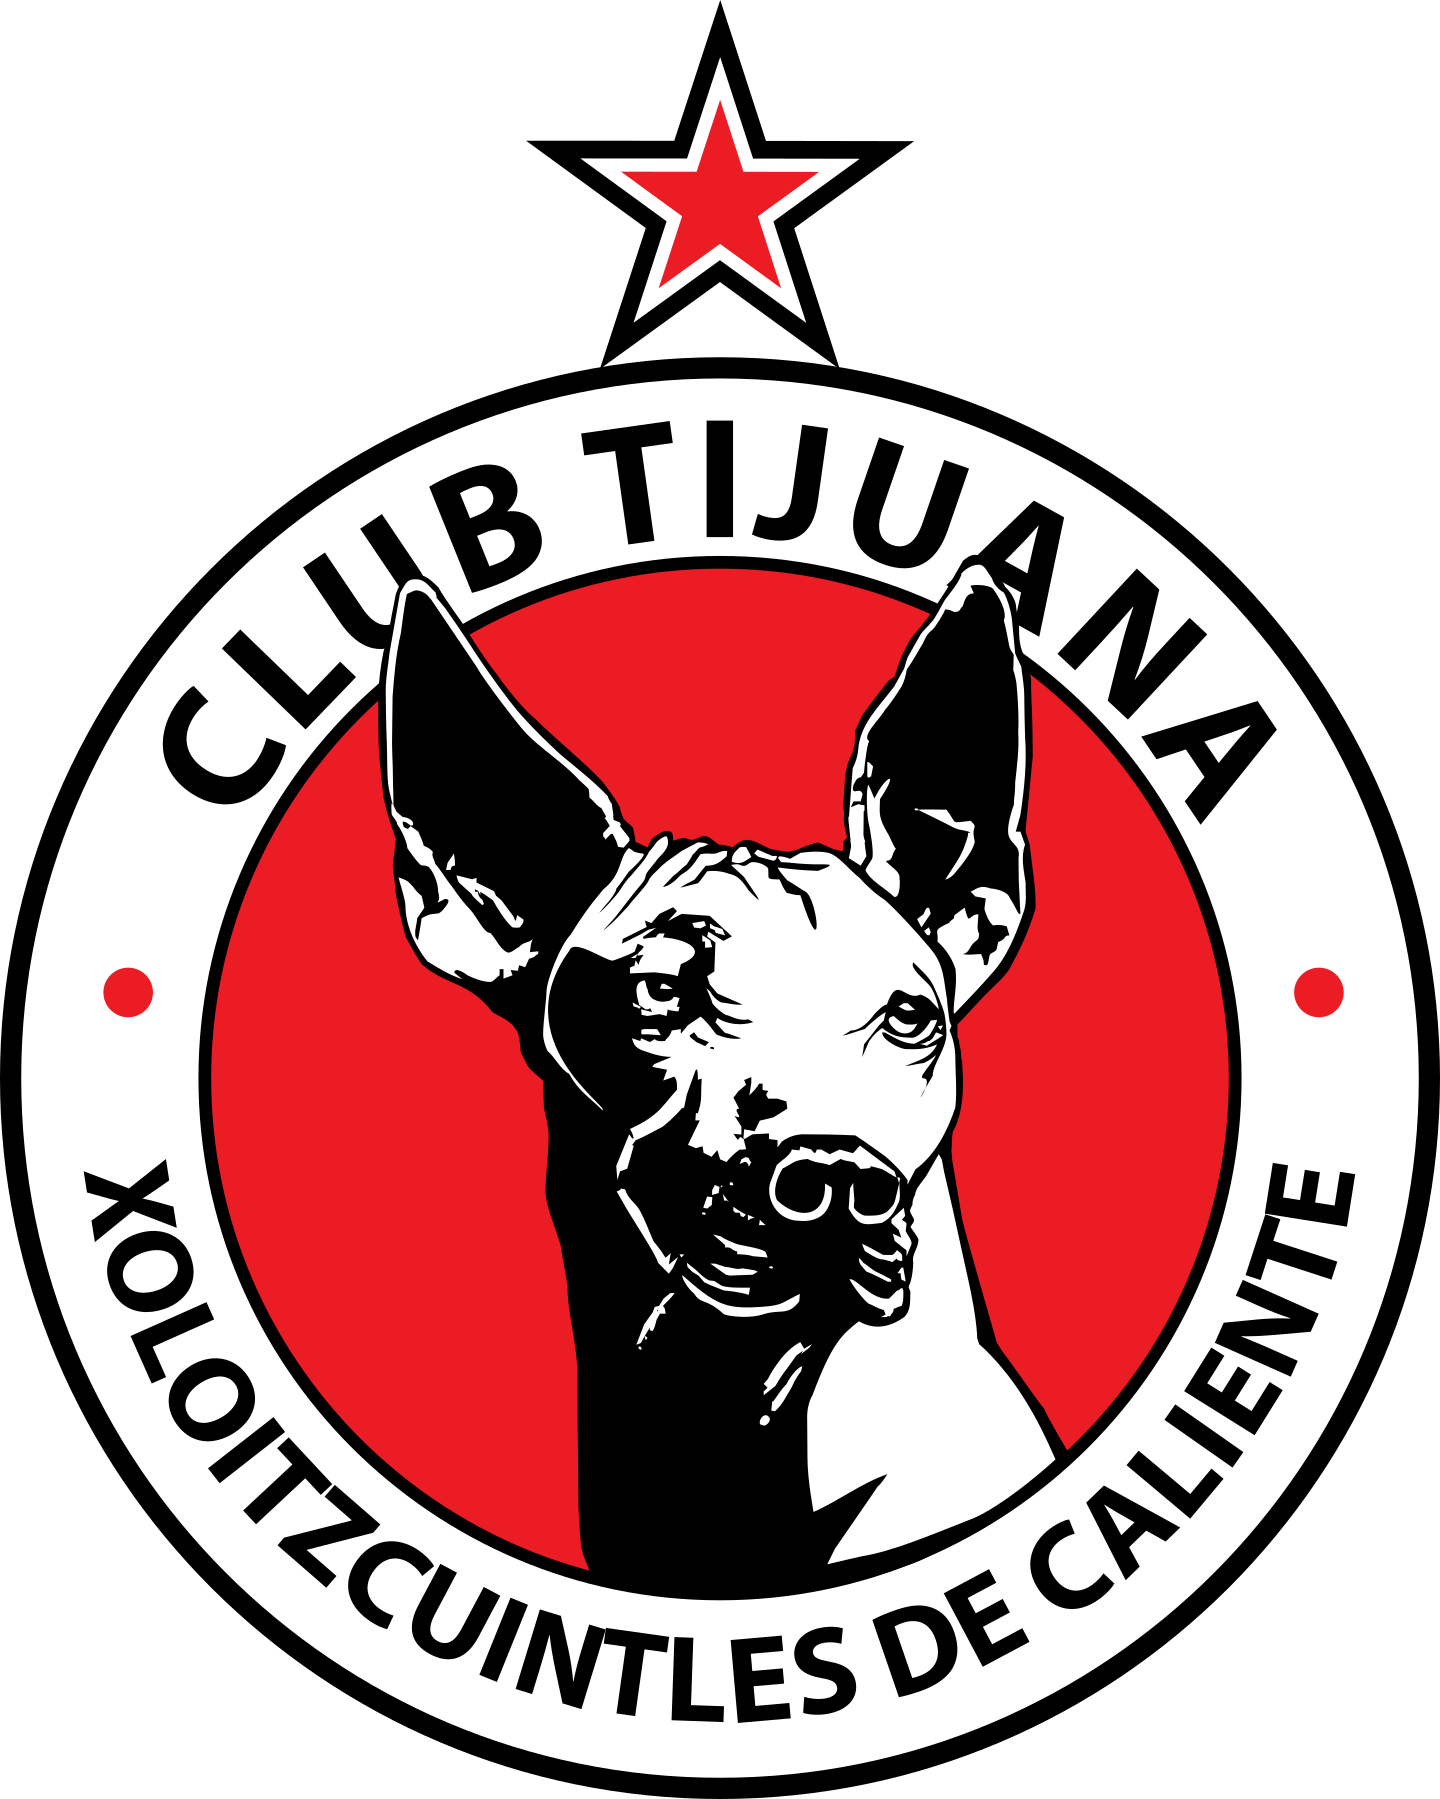 club tijuana logo 2 - Club Tijuana Logo